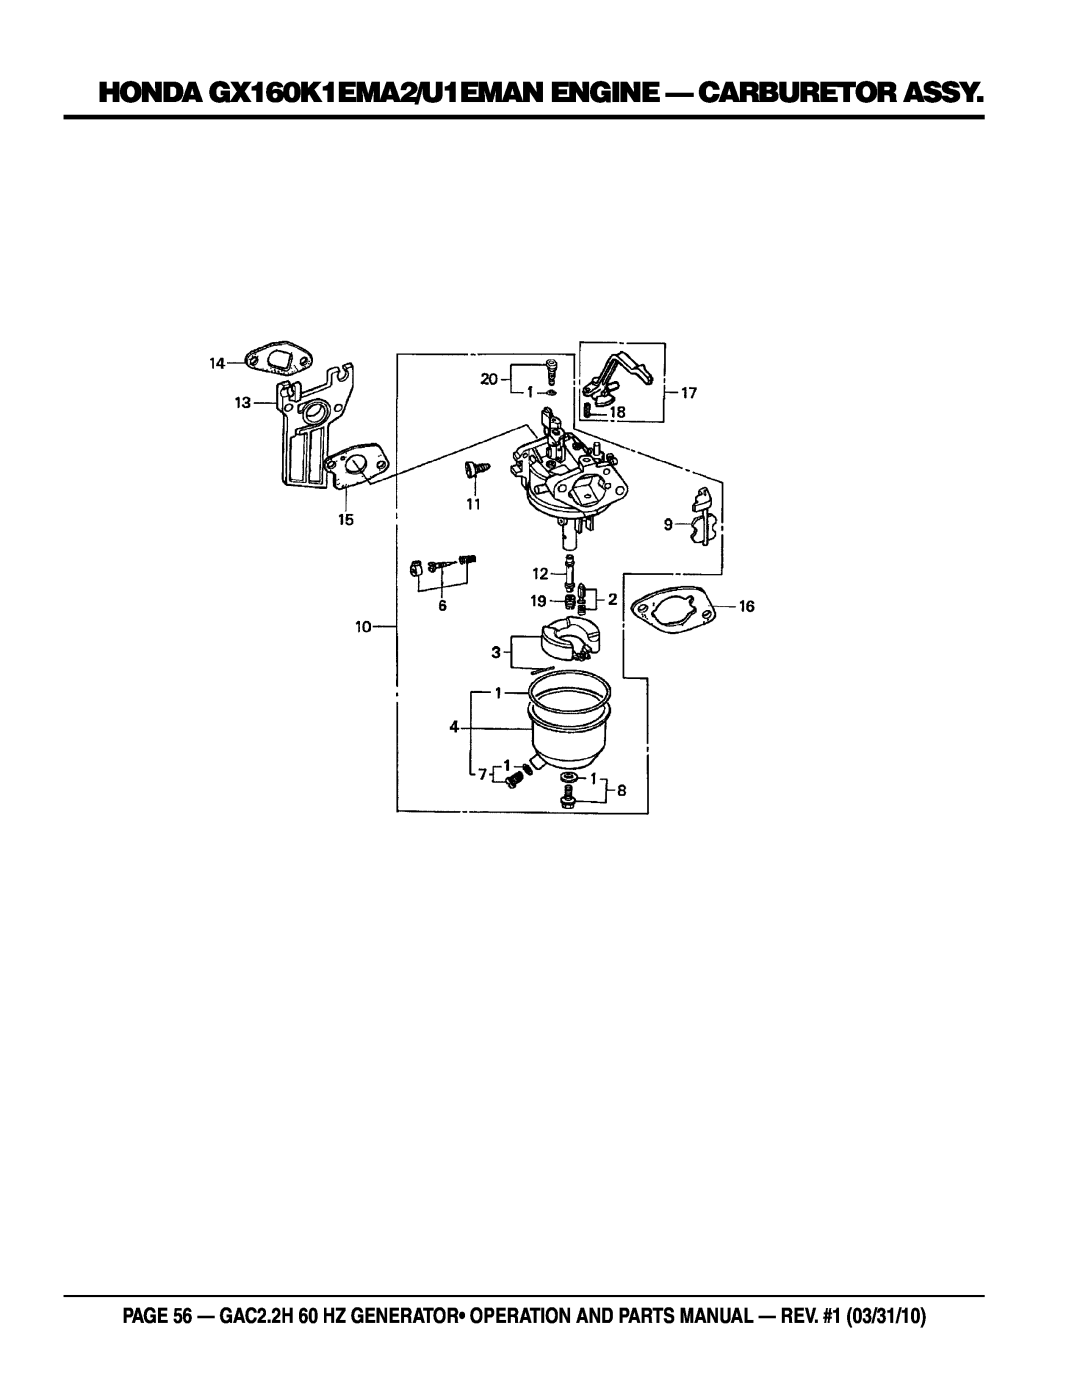 Multiquip GAC2.2H manual HONDA GX160K1EMA2/U1EMAN engine - caRBURETOR assy 